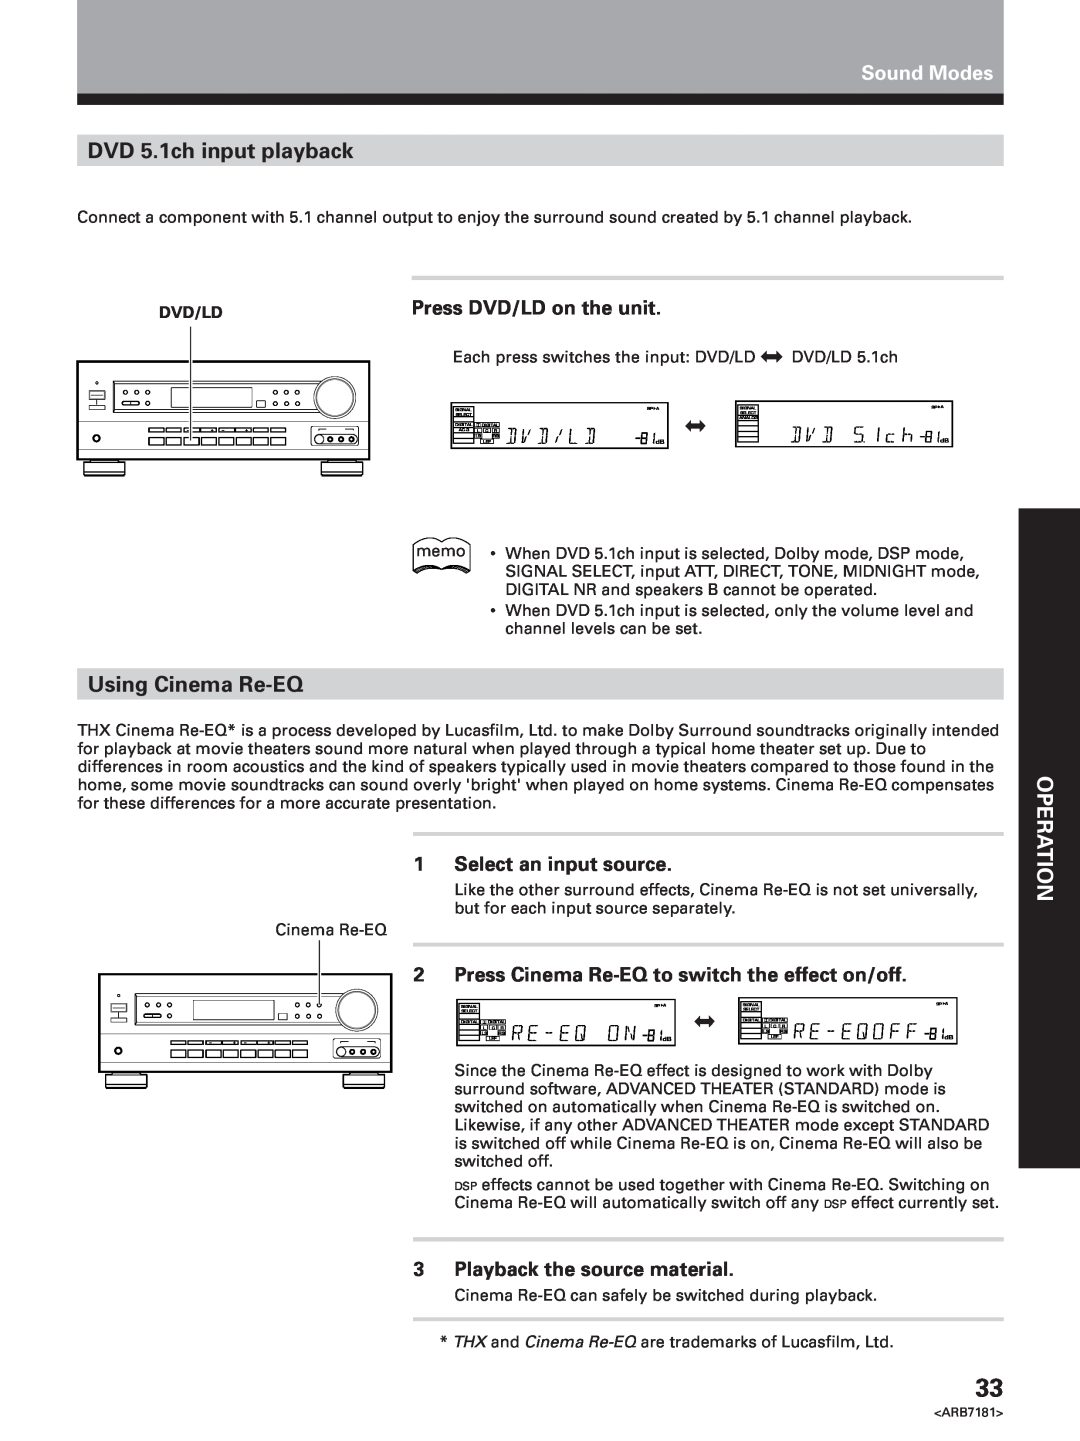 Pioneer VSX-21 manual DVD 5.1ch input playback, Using Cinema Re-EQ, Set Up, Operation, Sound Modes, Dvd/Ld 